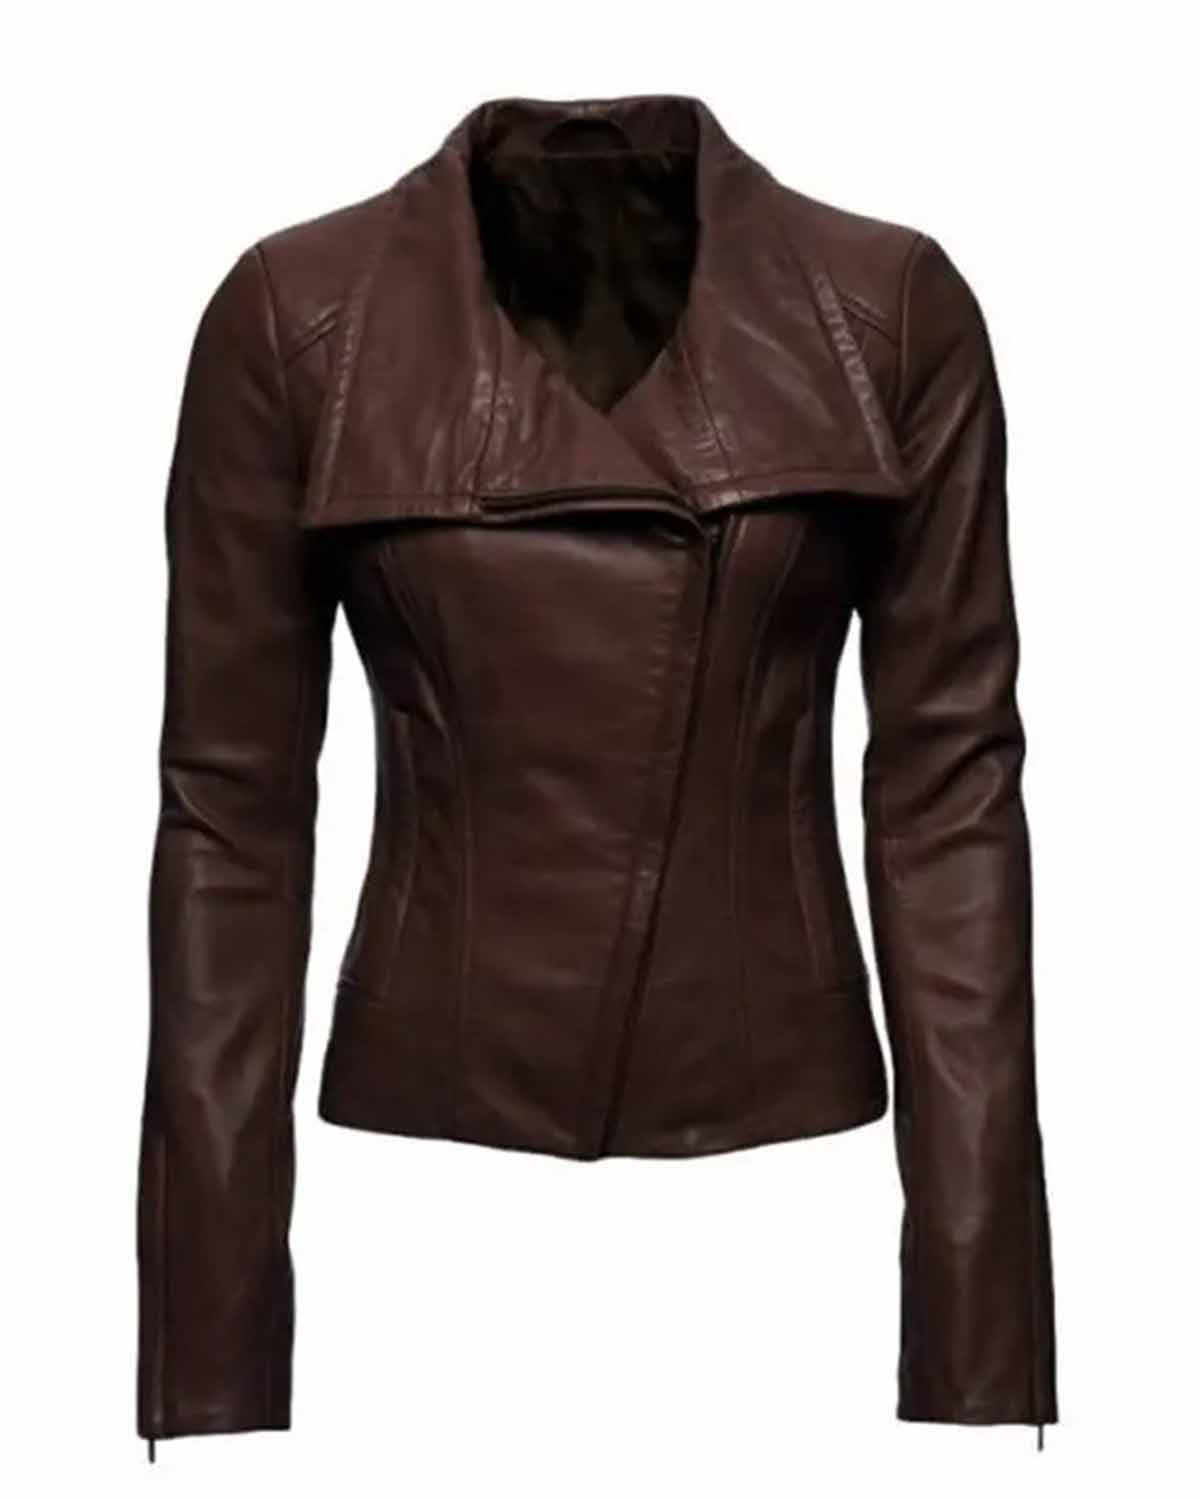 Elite Arrow TV Series Lyla Michaels Brown Leather Jacket